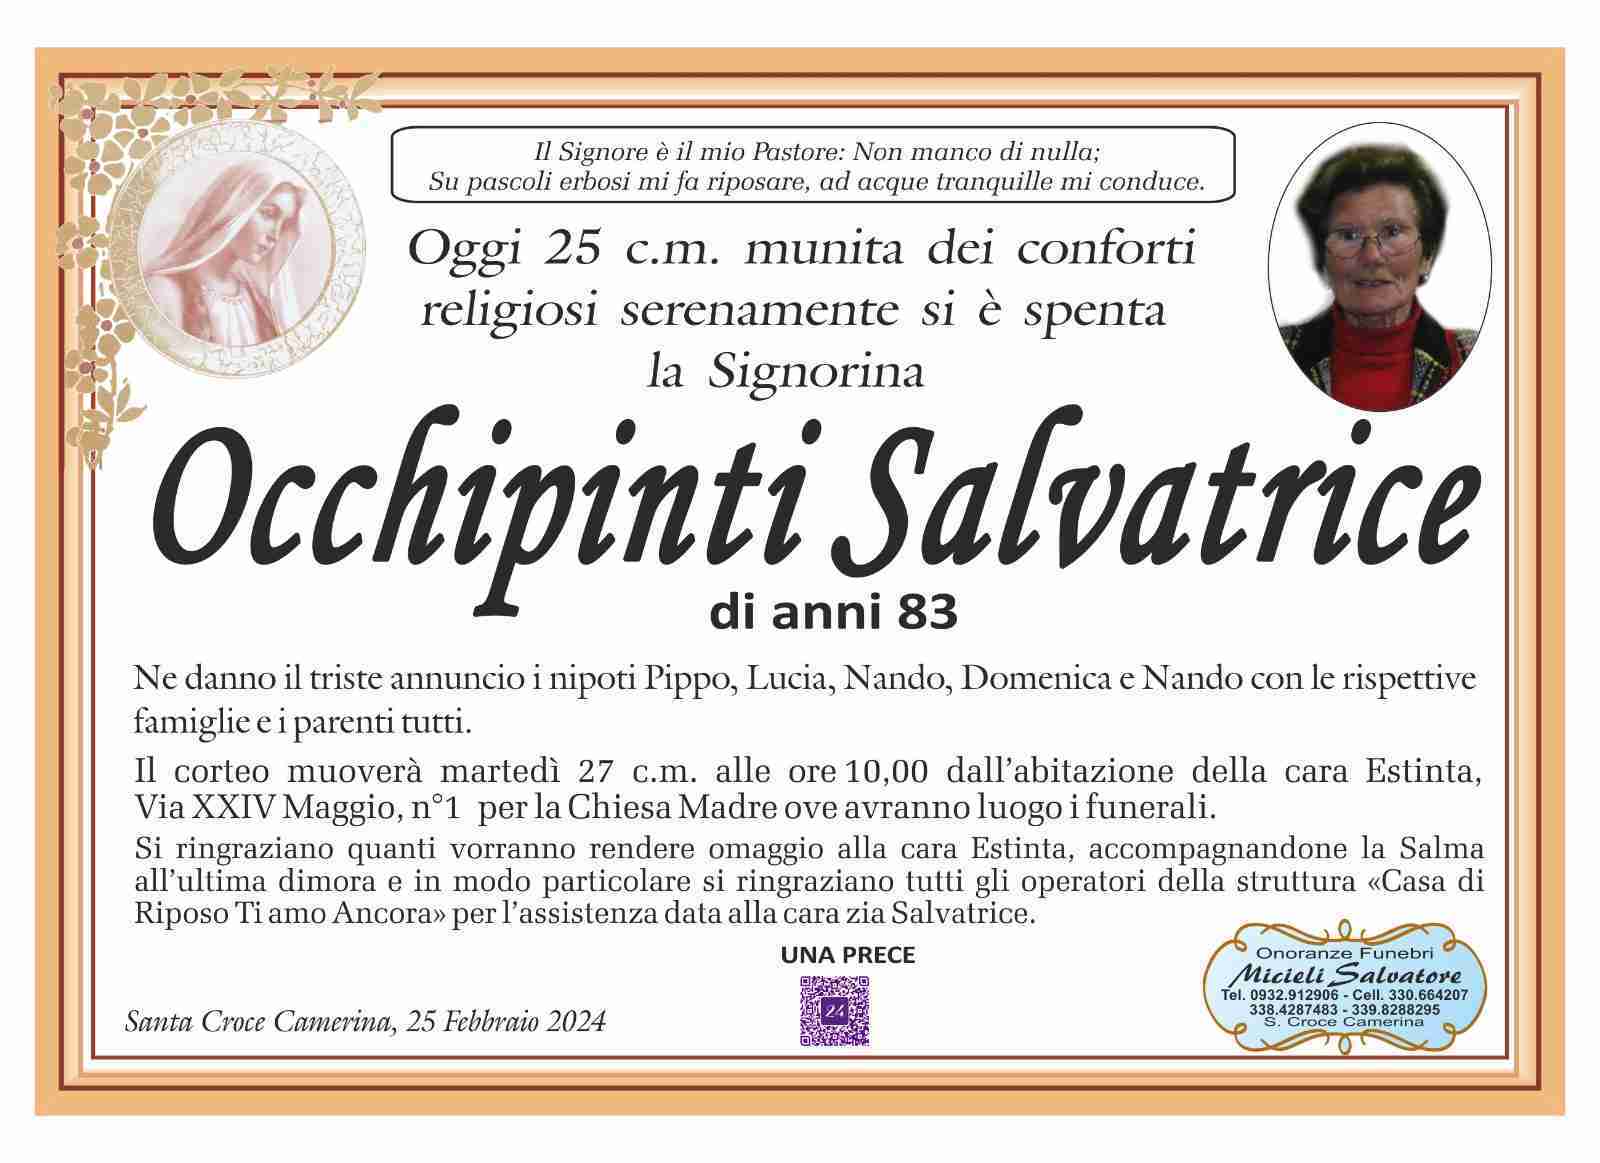 Salvatrice Occhipinti